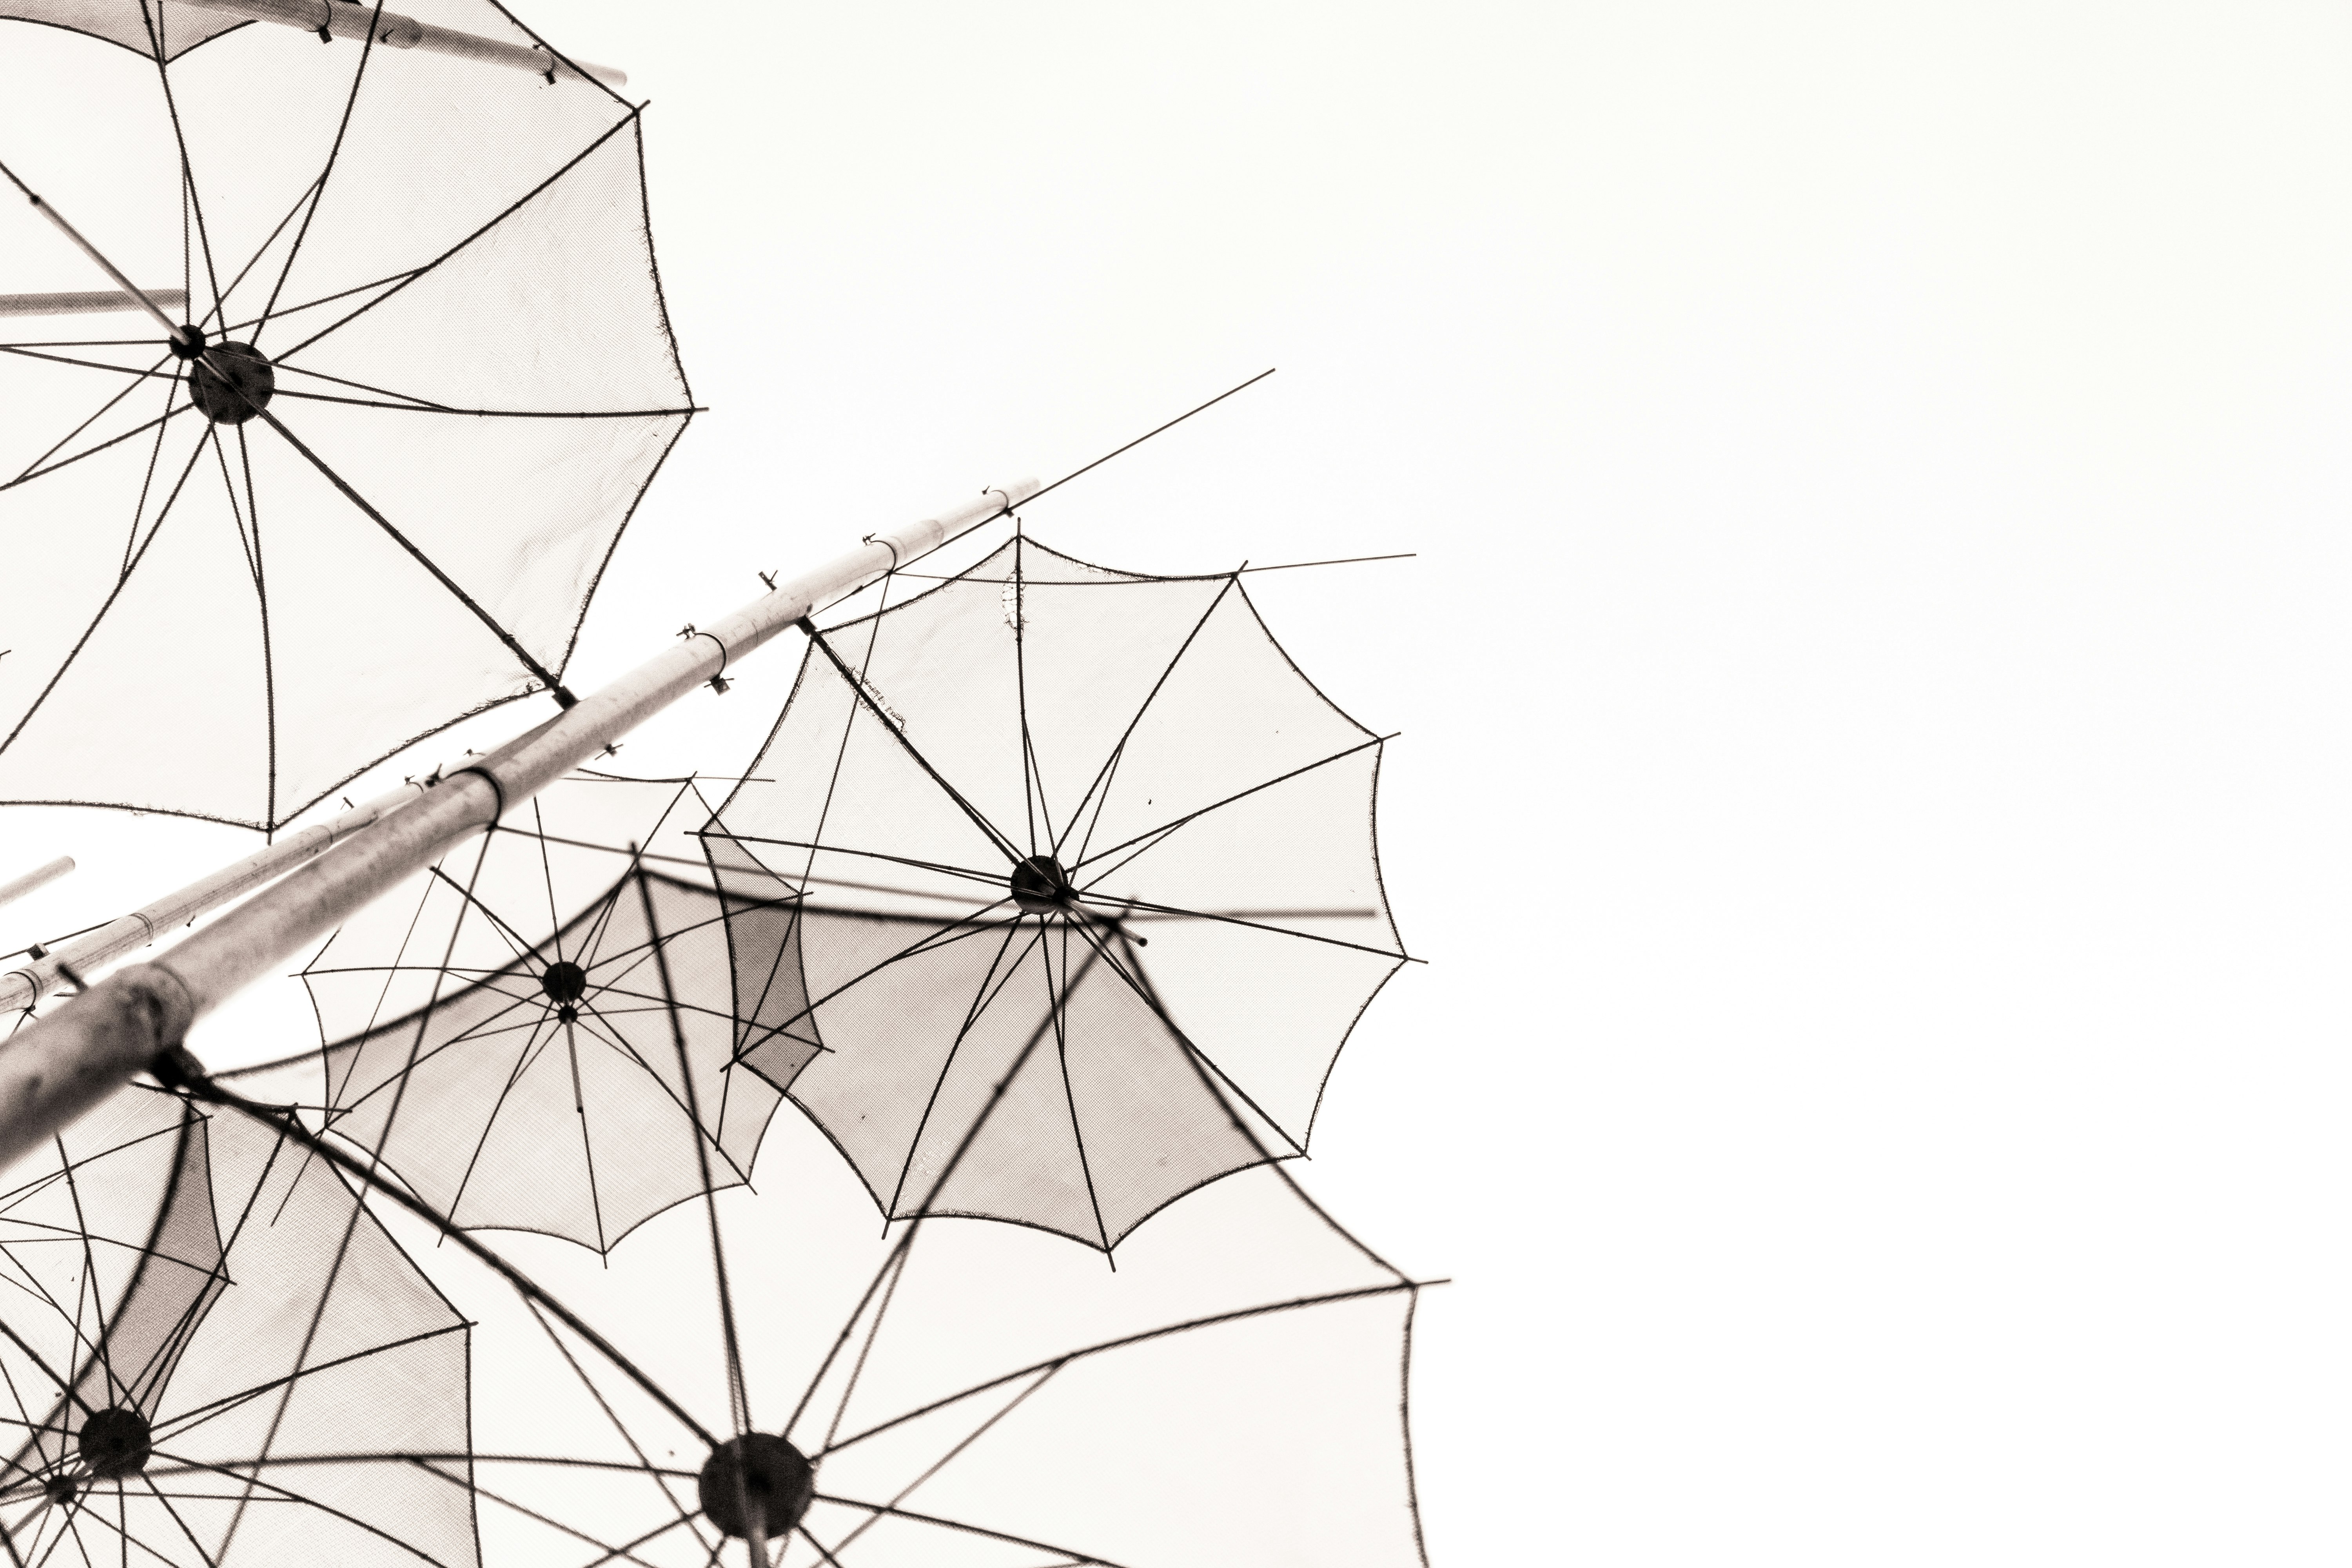 umbrellas outline under white sky at daytime